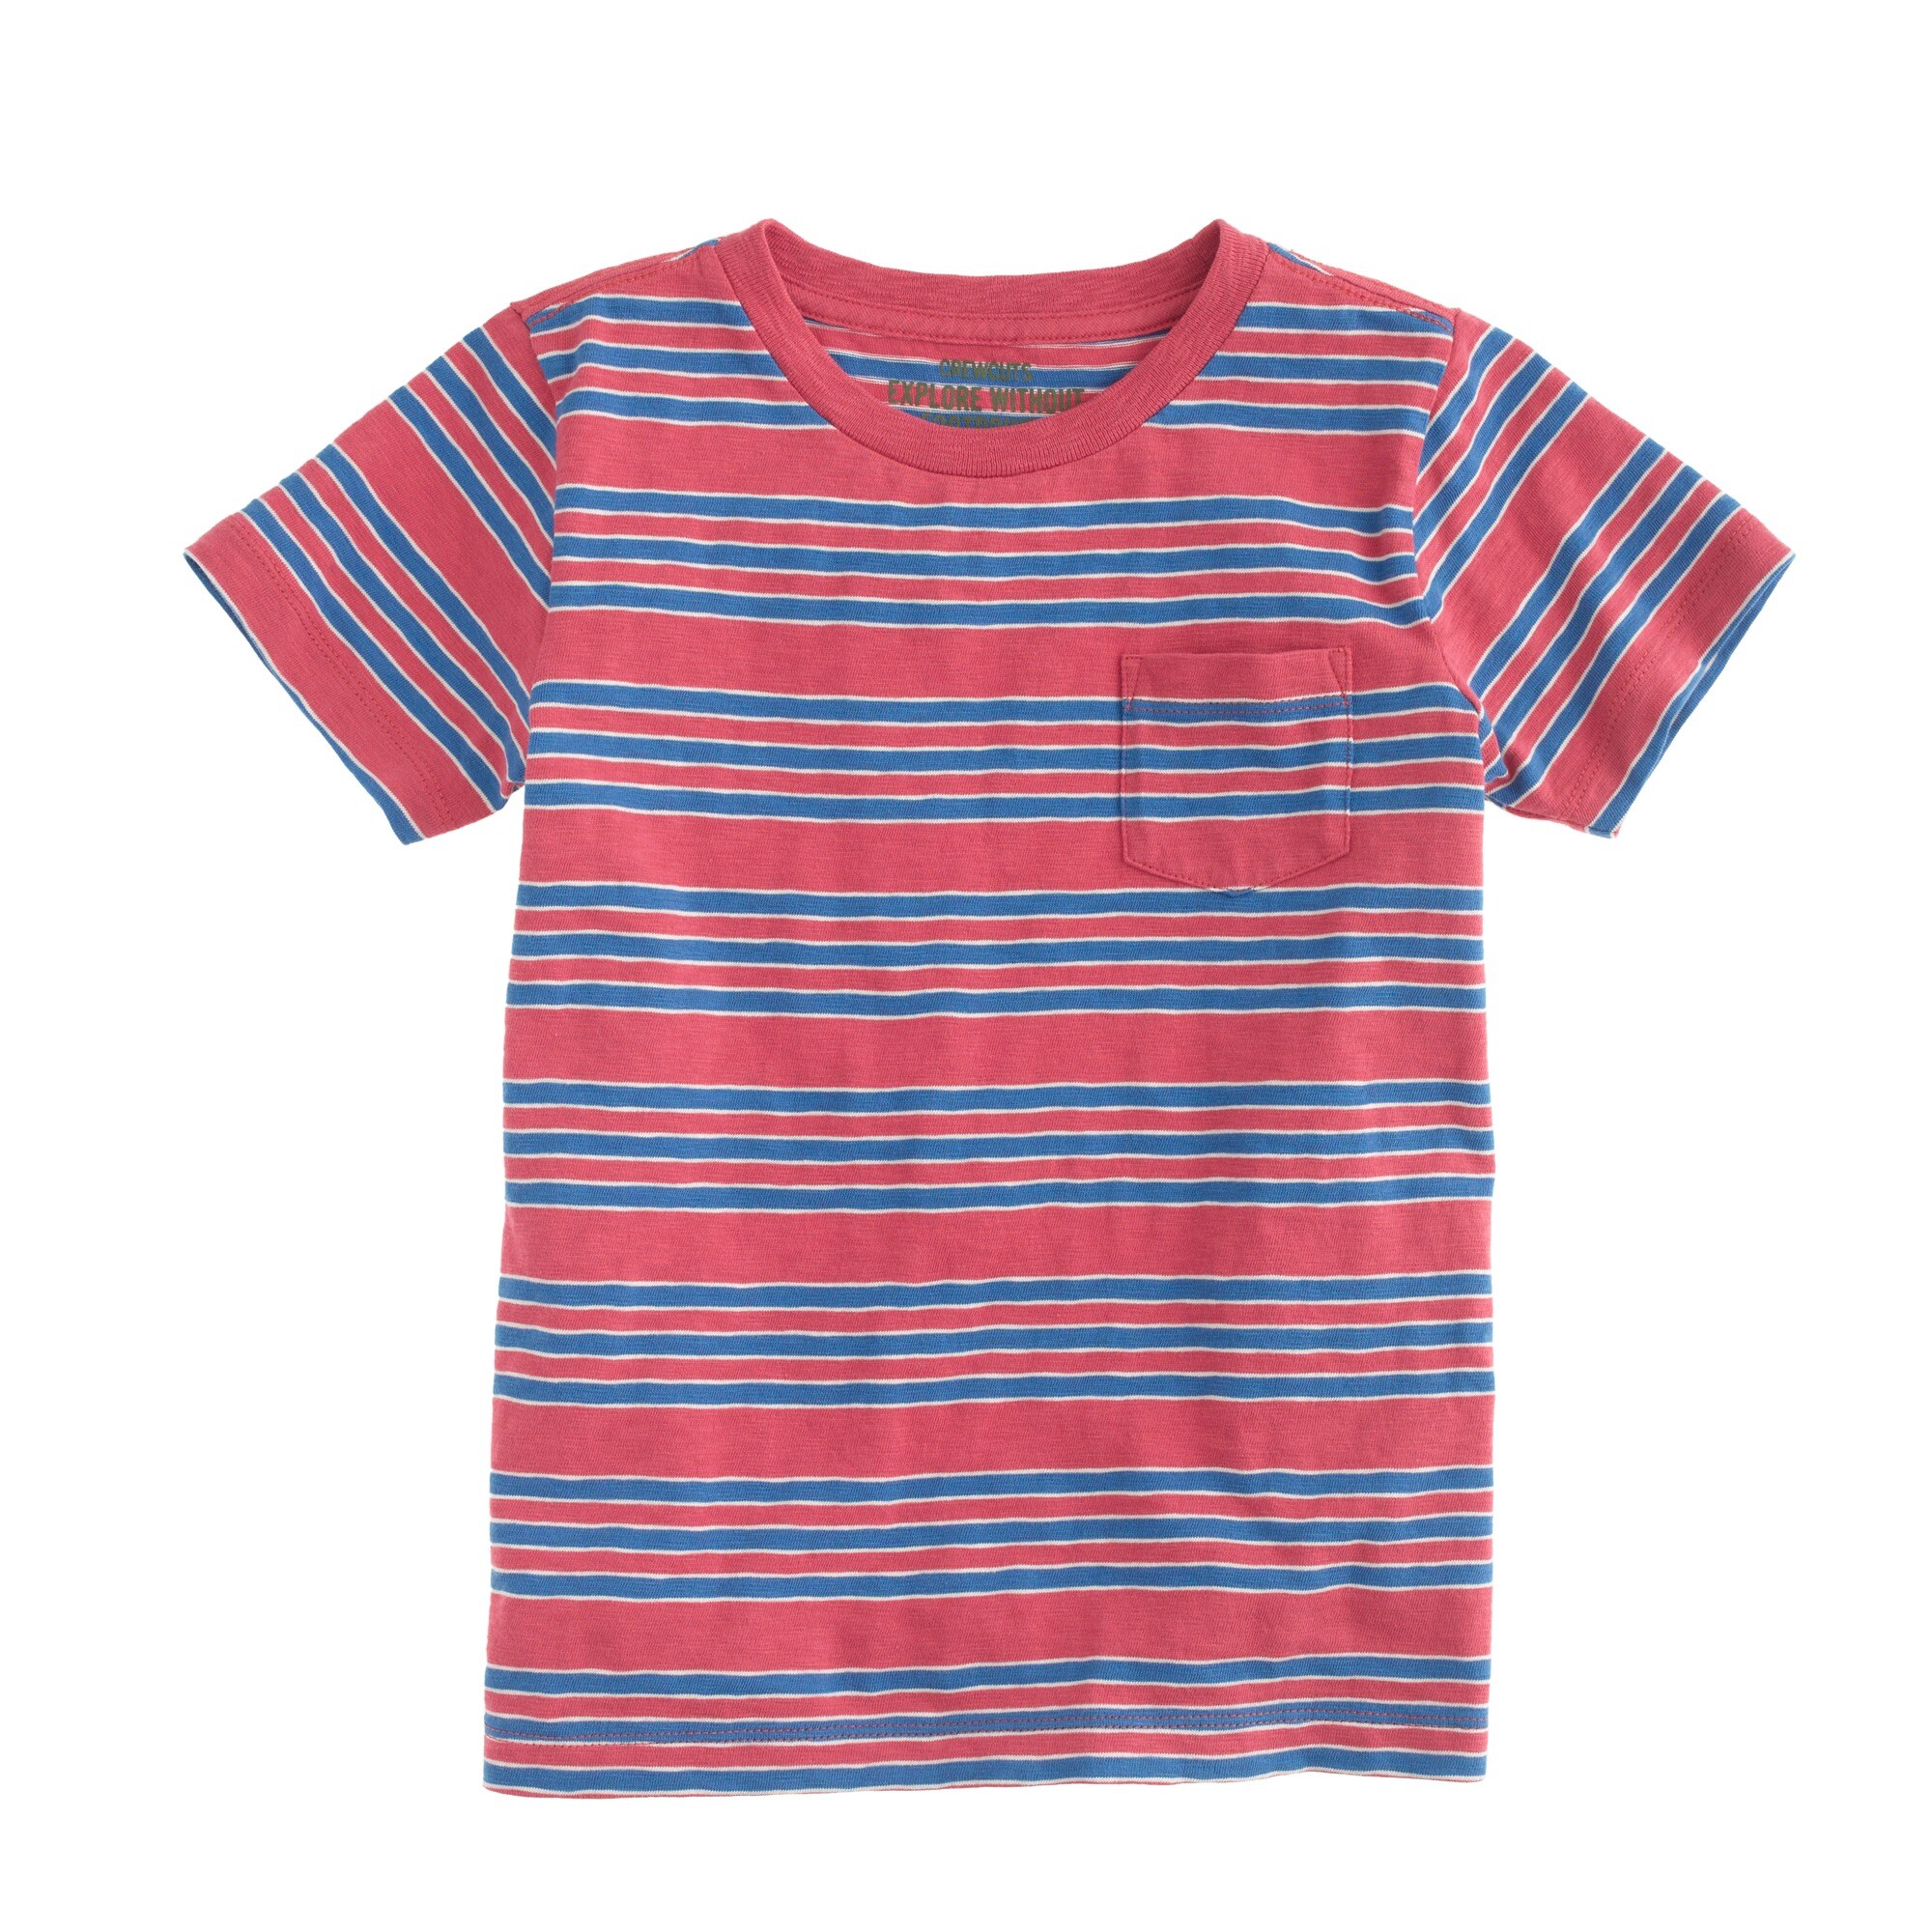 Boys' pocket T-shirt in vintage stripe : Boy Stripes & Novelty | J.Crew